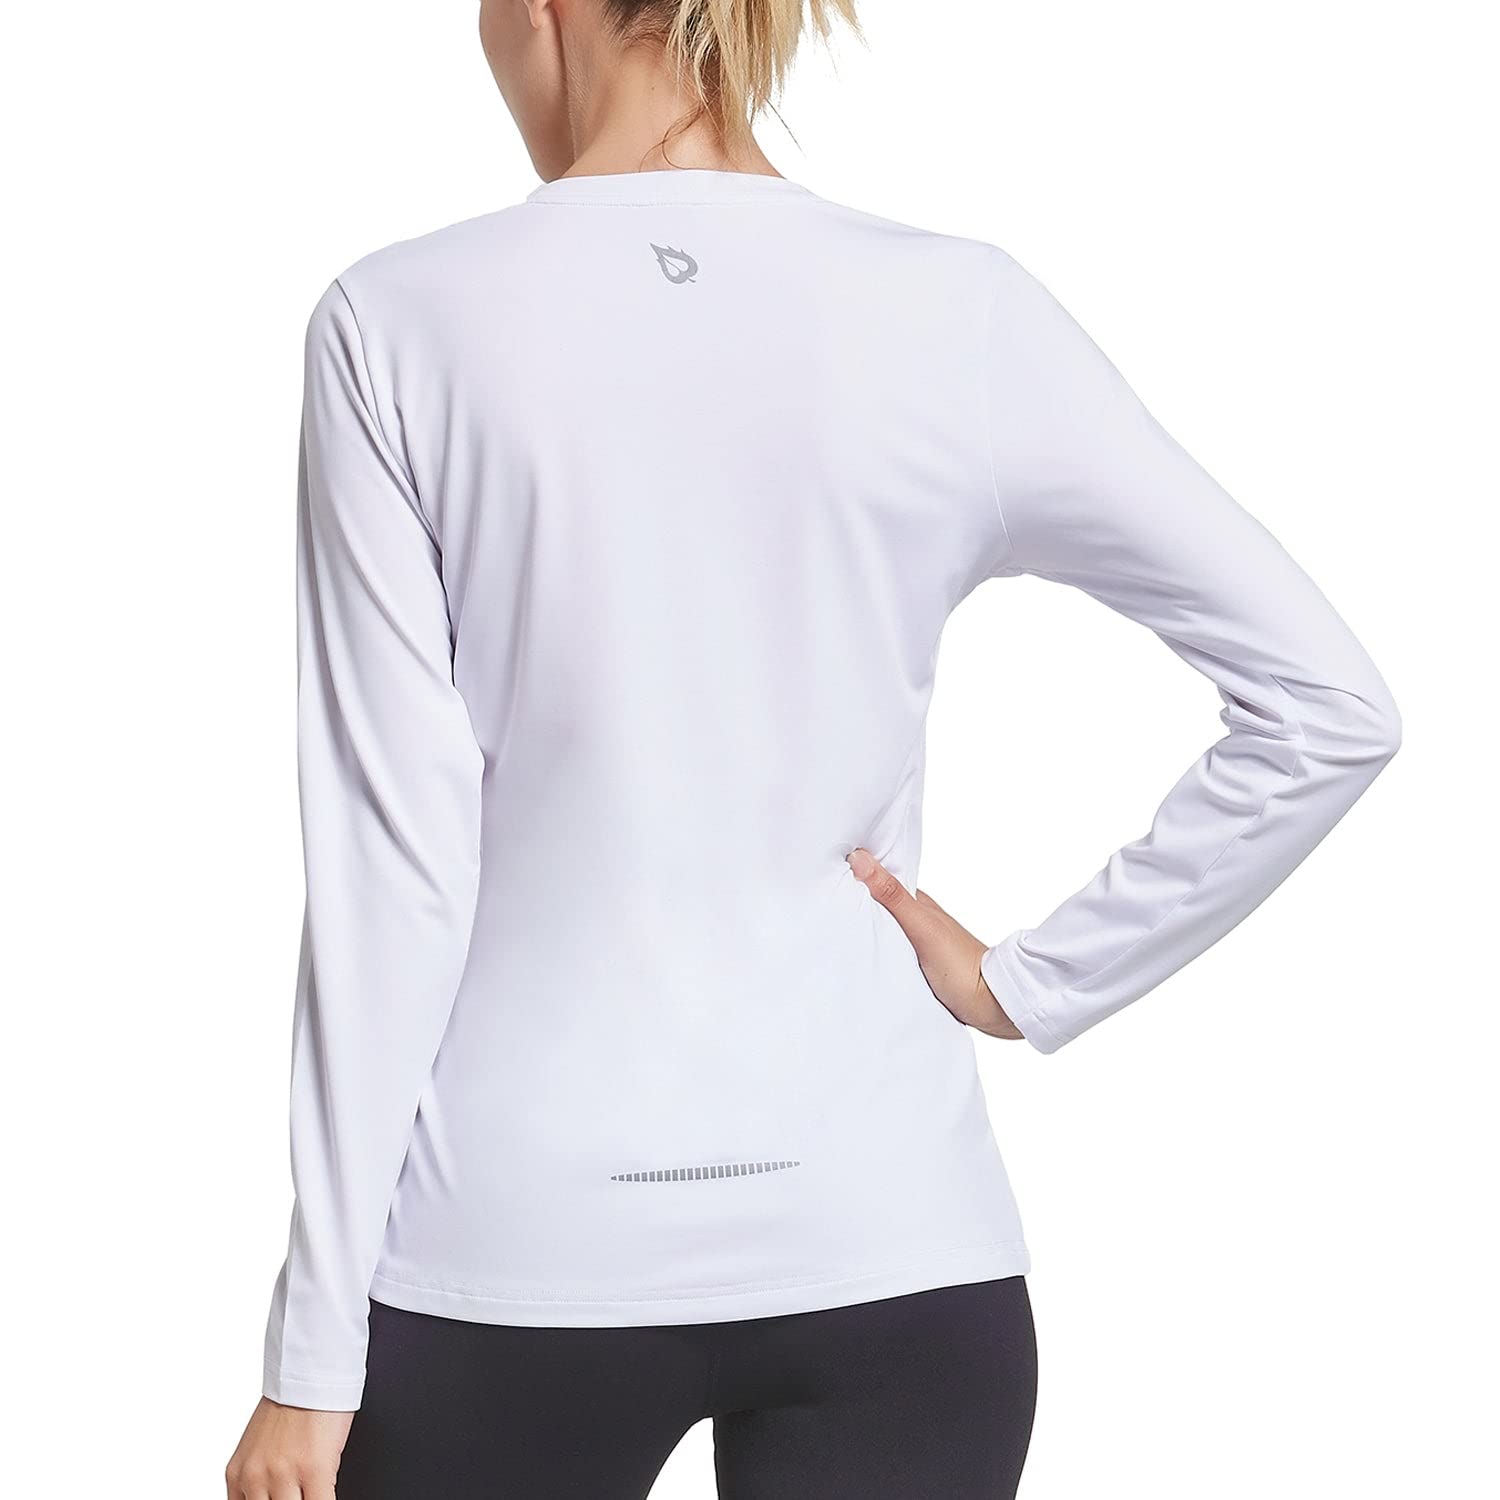 BALEAF Women's Long Sleeve Running Shirts Quick Dry Athletic